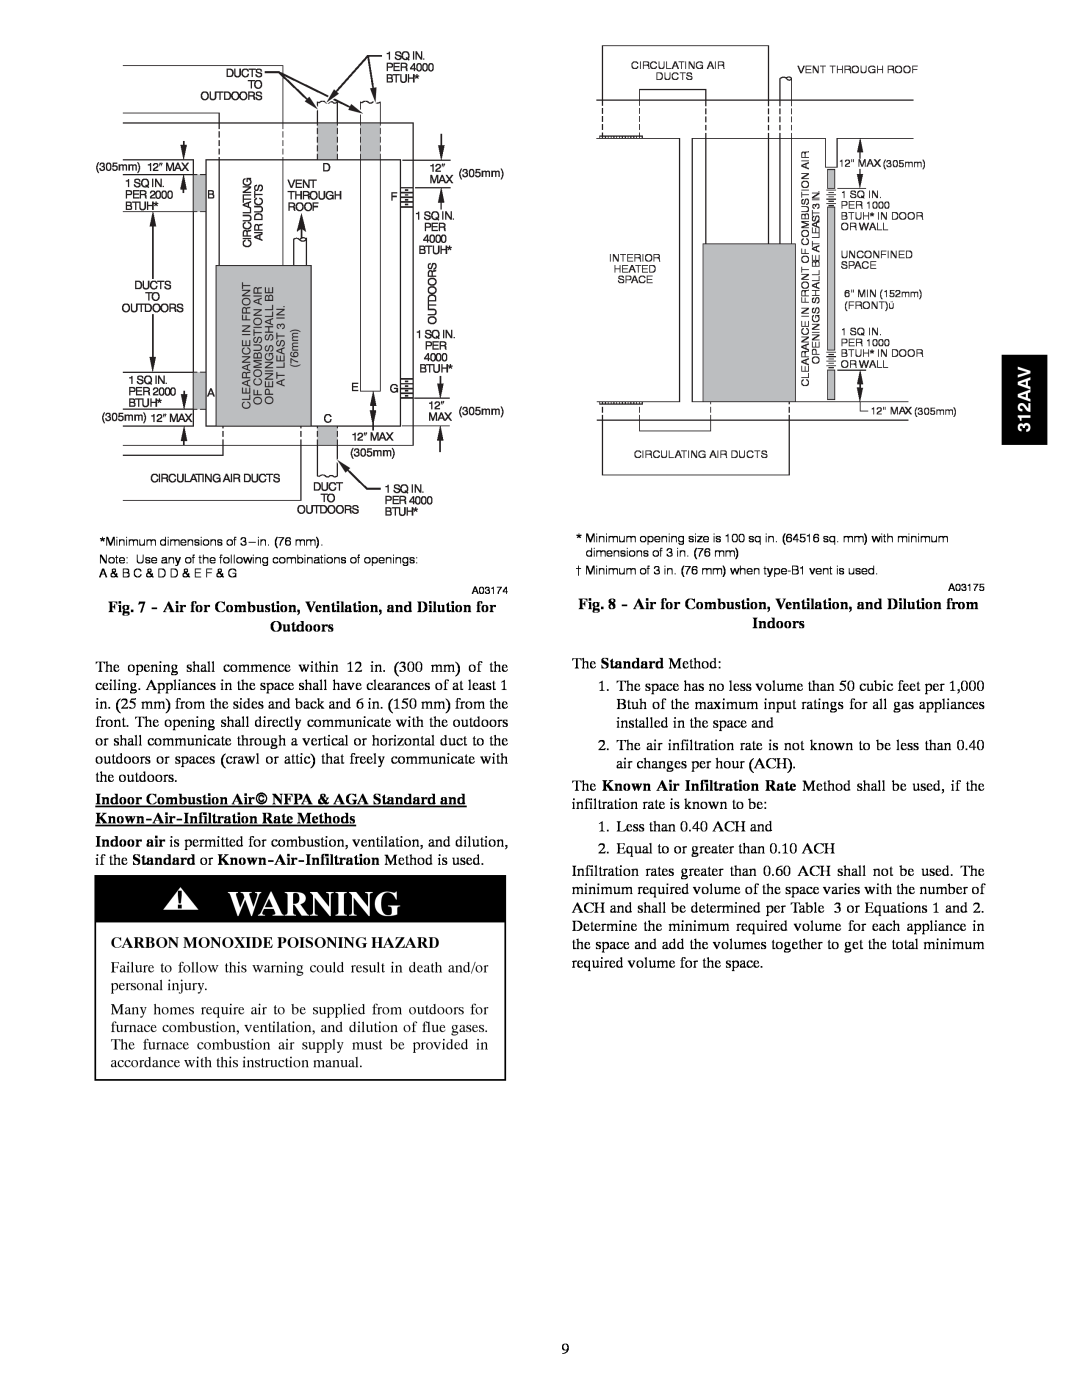 Bryant 312AAV/JAV instruction manual Outdoors, Indoors, Carbon Monoxide Poisoning Hazard 